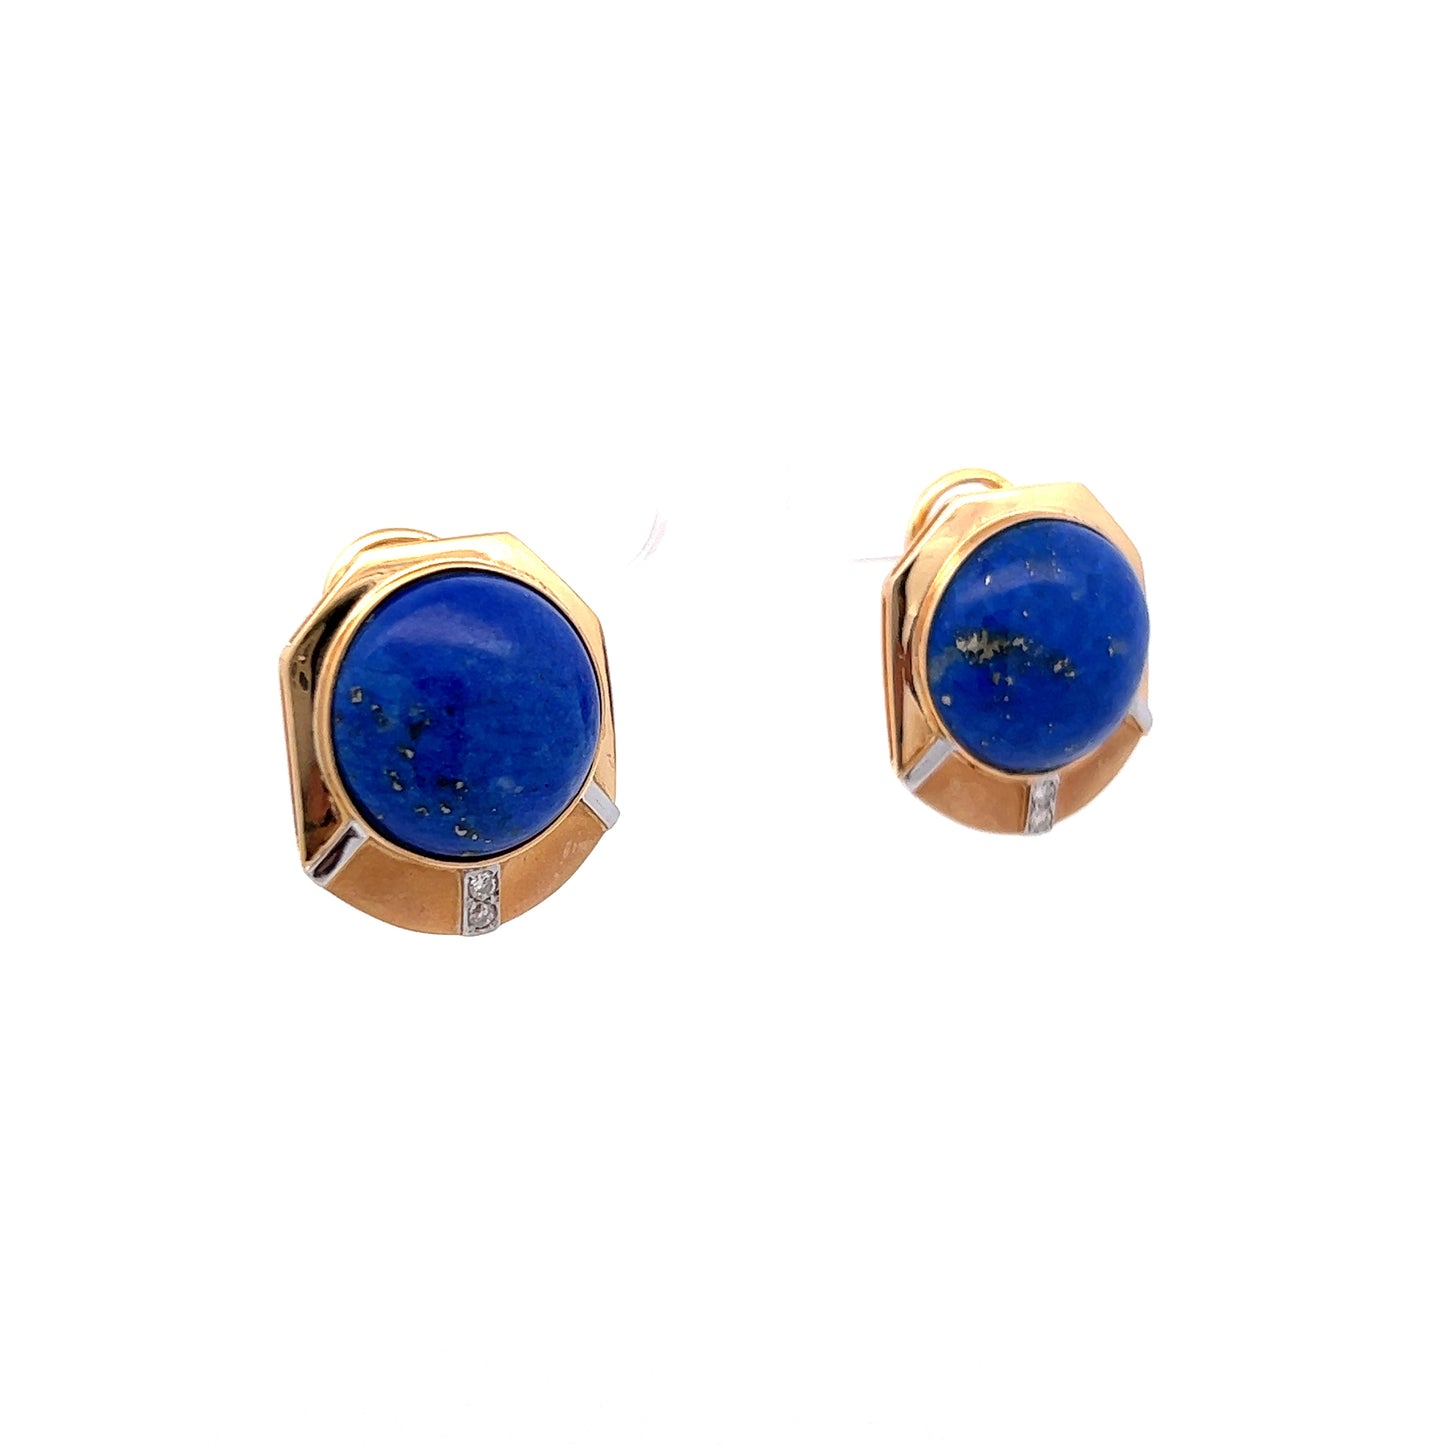 Cabochon Lapis Lazuli & Diamond Earrings in 14k Yellow Gold